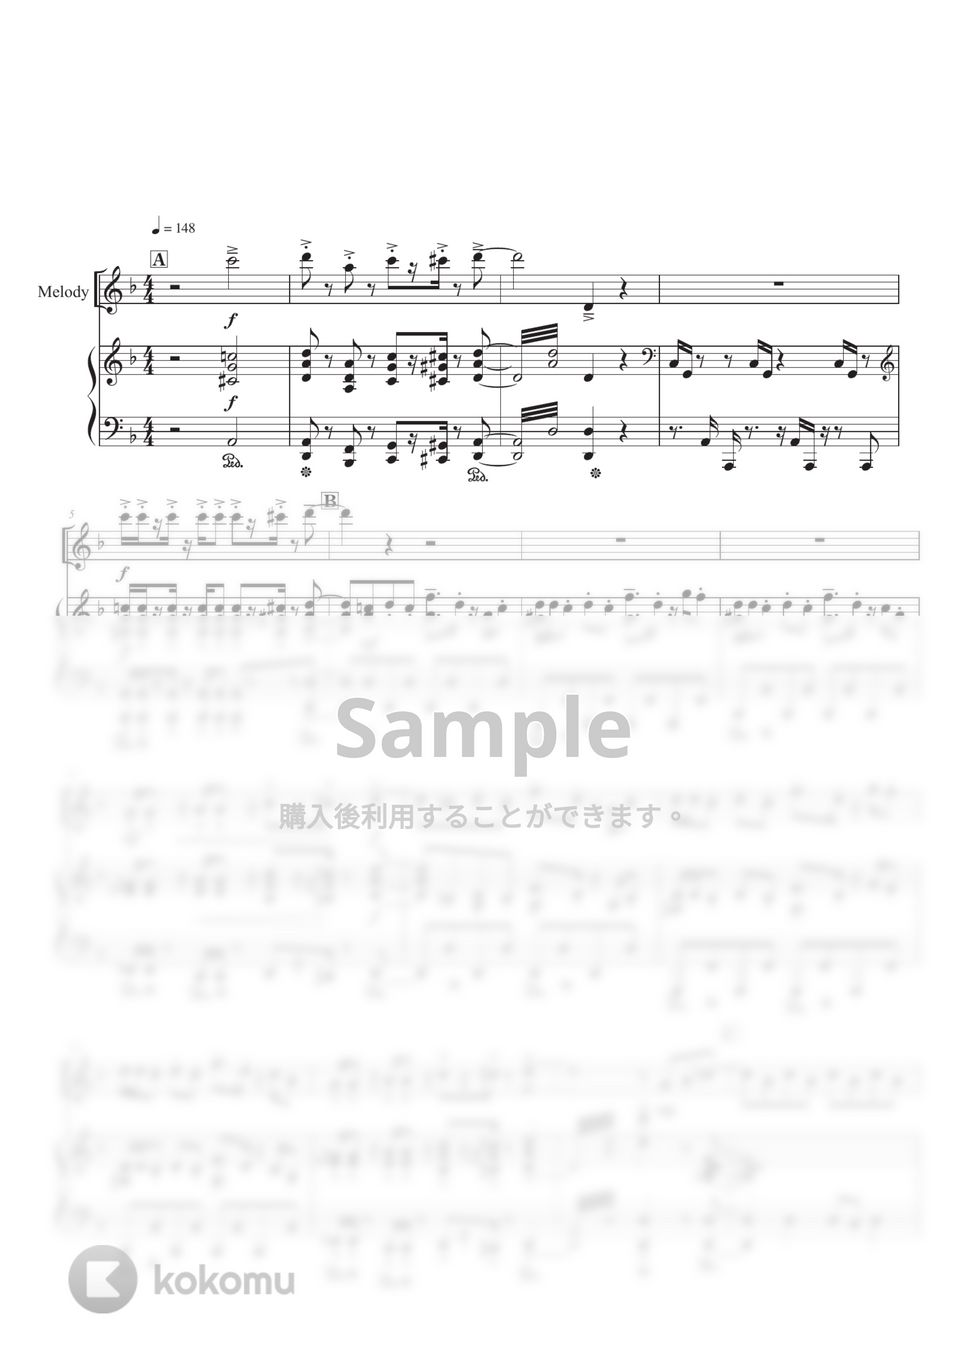 Ado - 阿修羅ちゃん/Ado メロディー(inB♭）&ピアノ by SugarPM